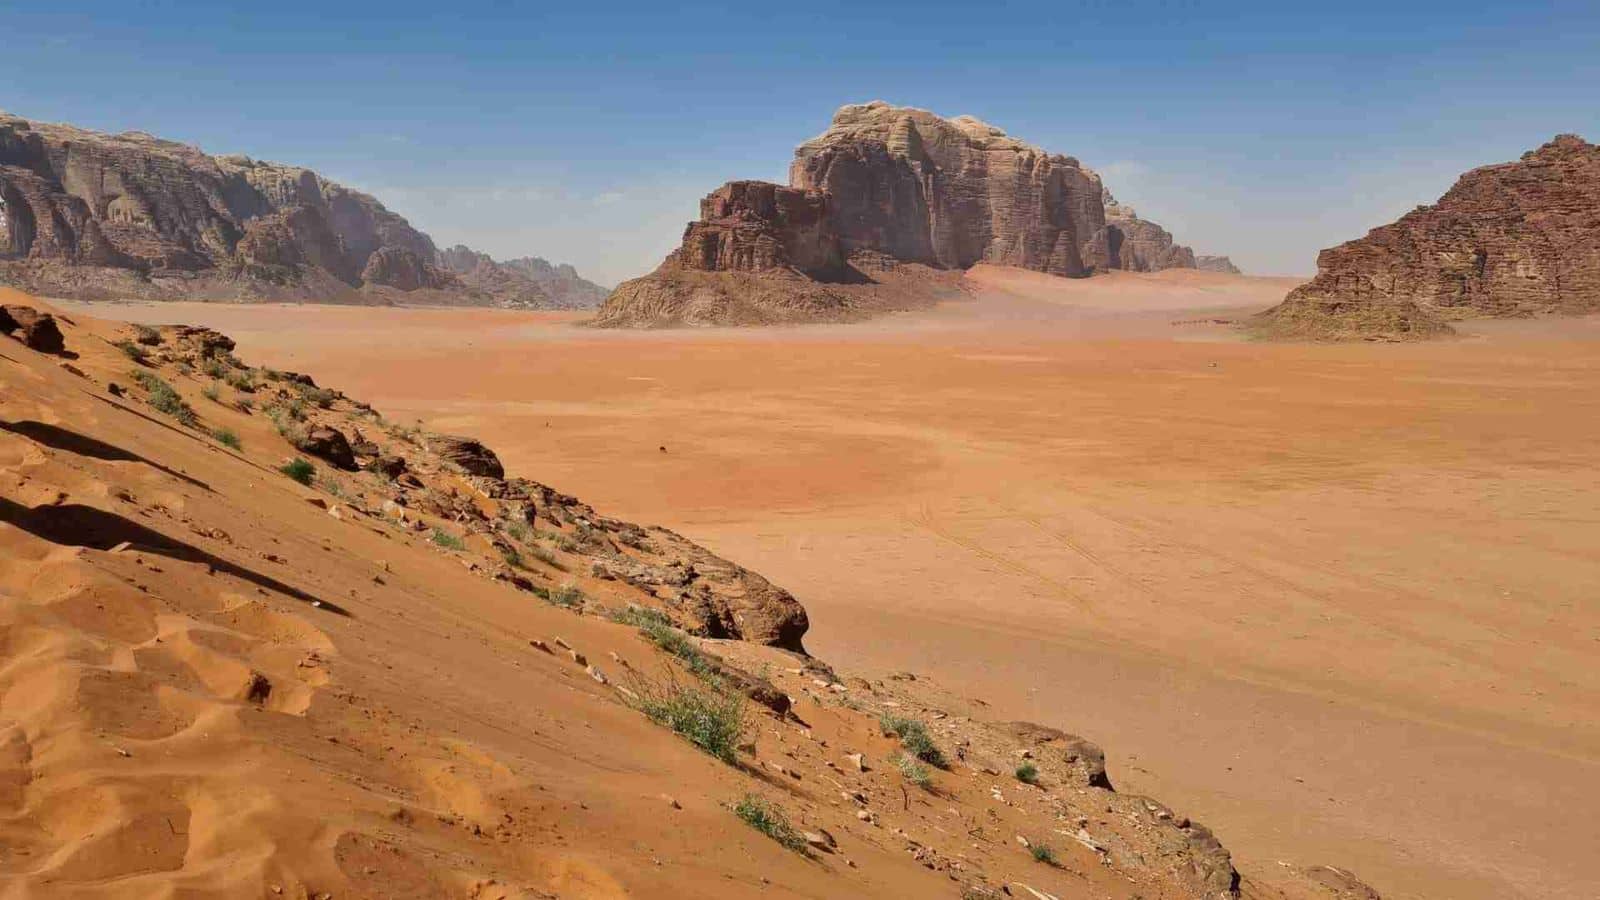 Wadi Rum, Jordan: A desert landscape of tranquil beauty